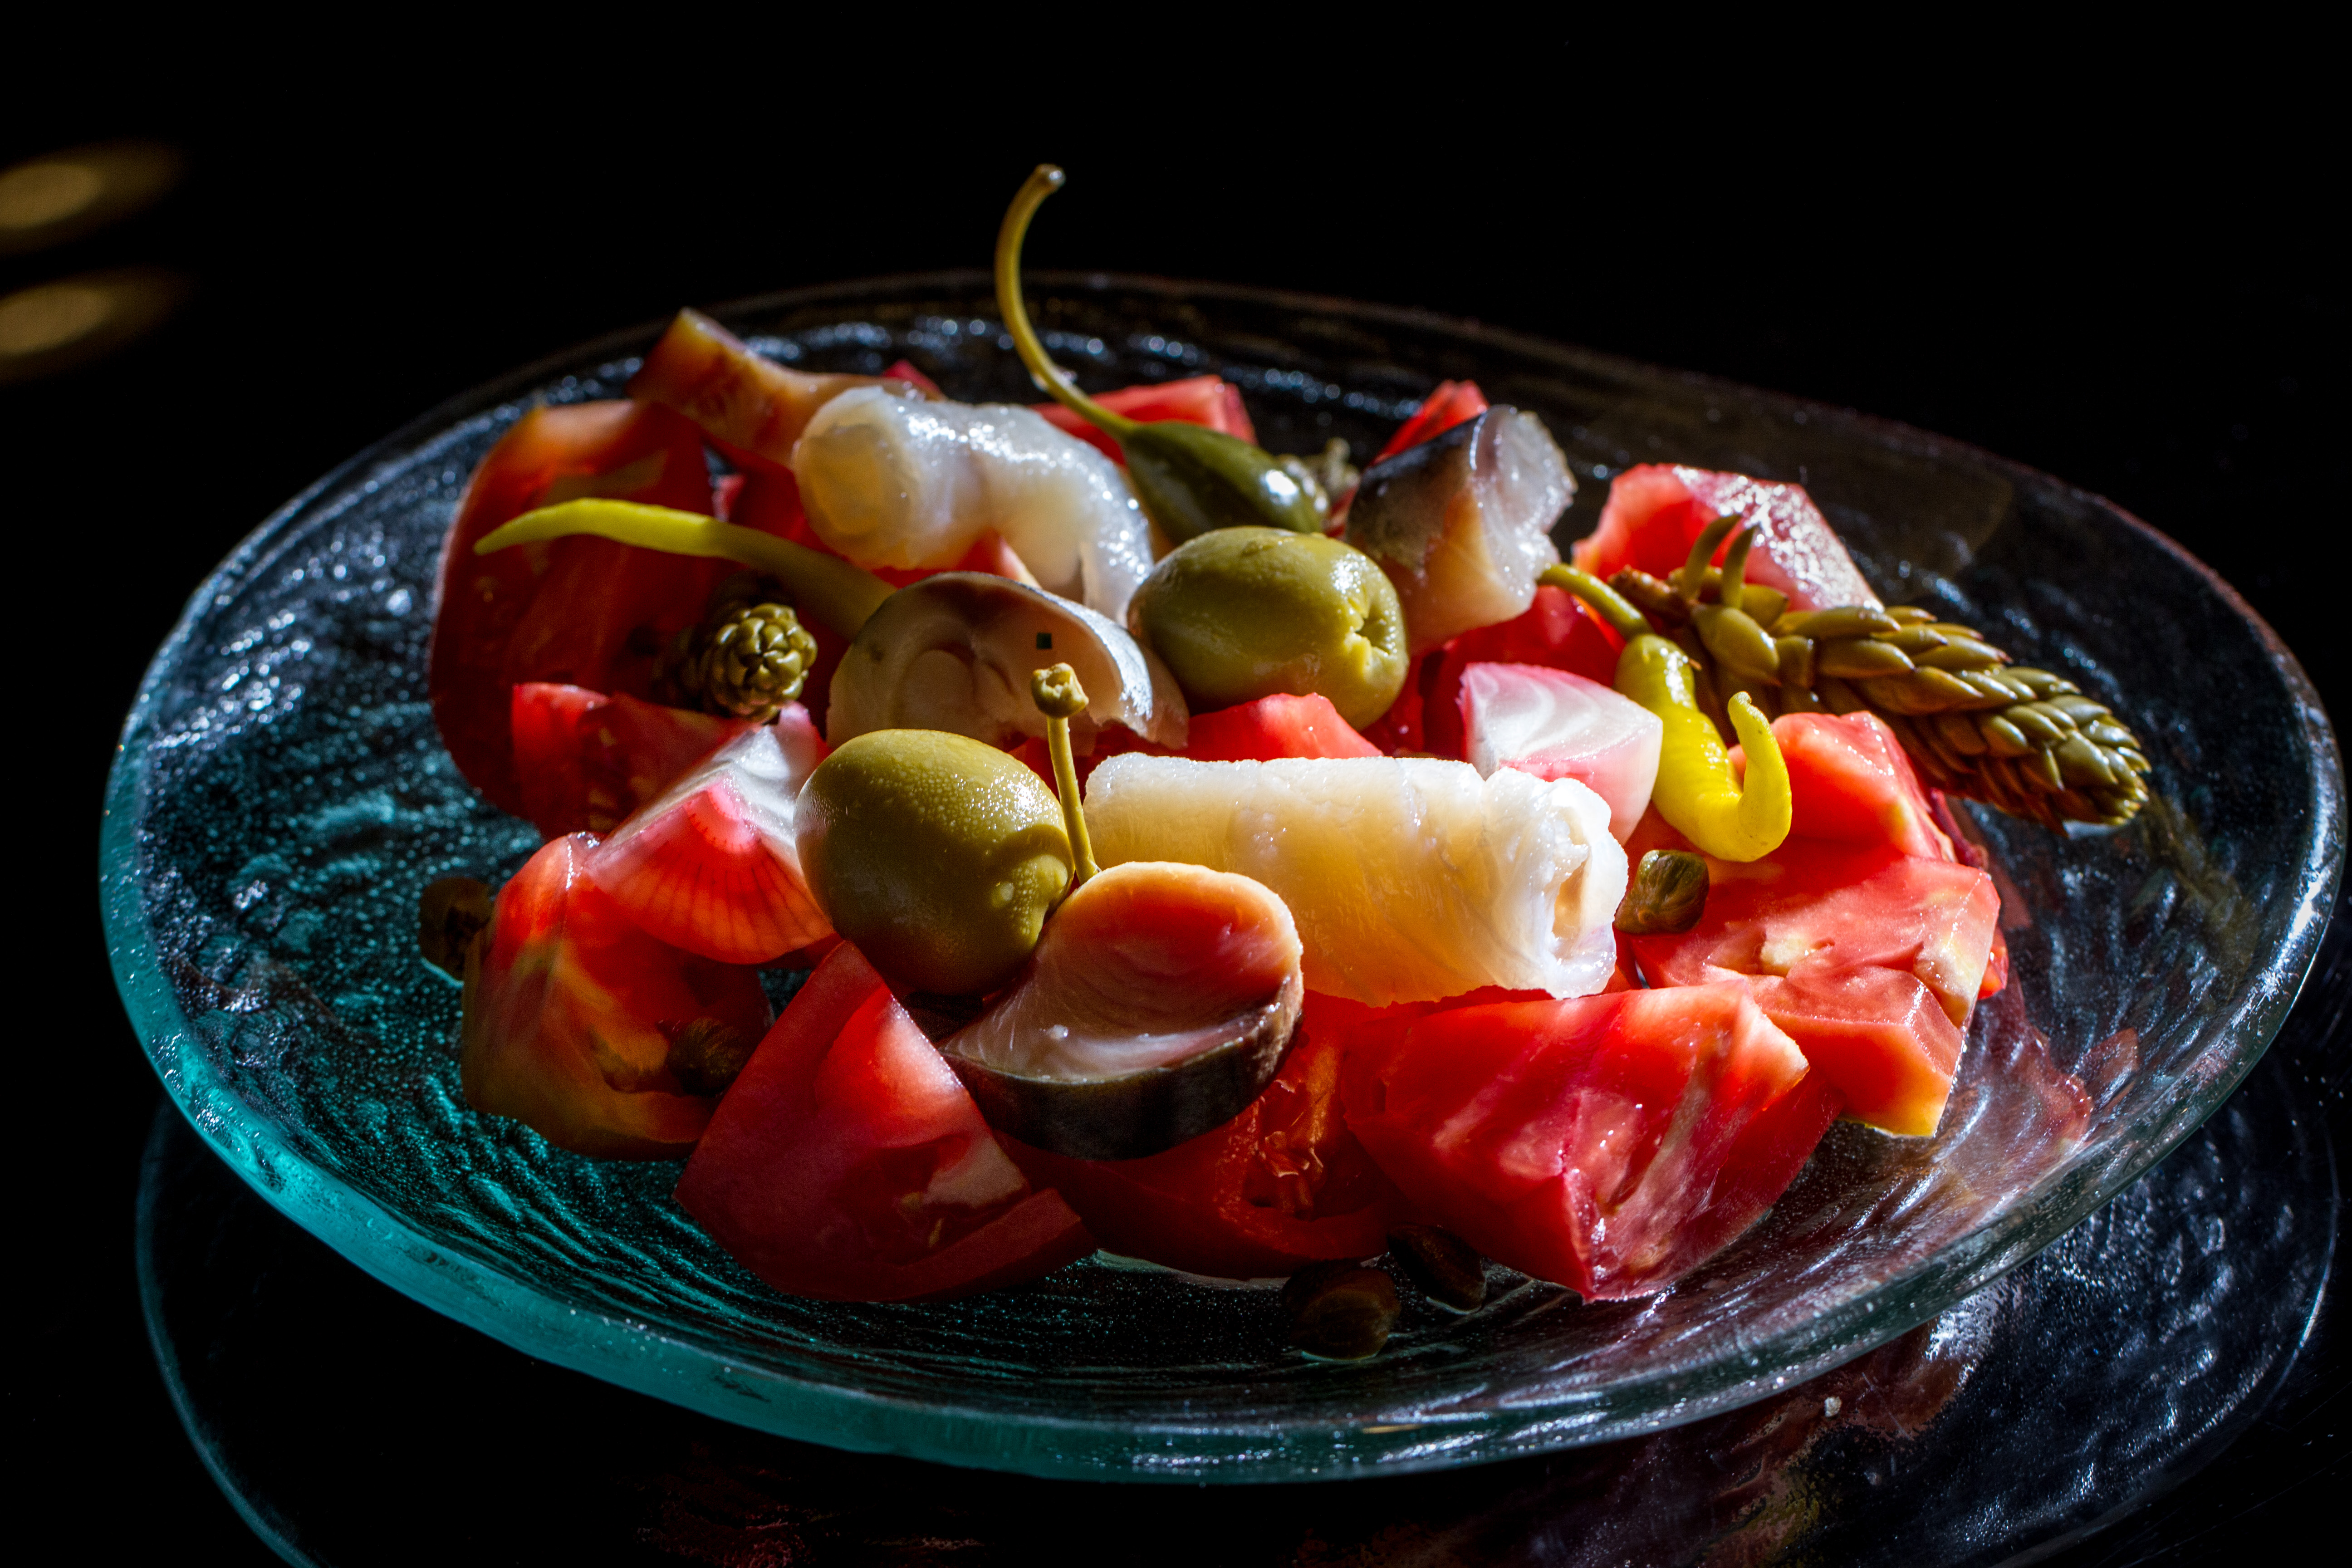 Alicantina salad (tomato, cured fish & pickles)